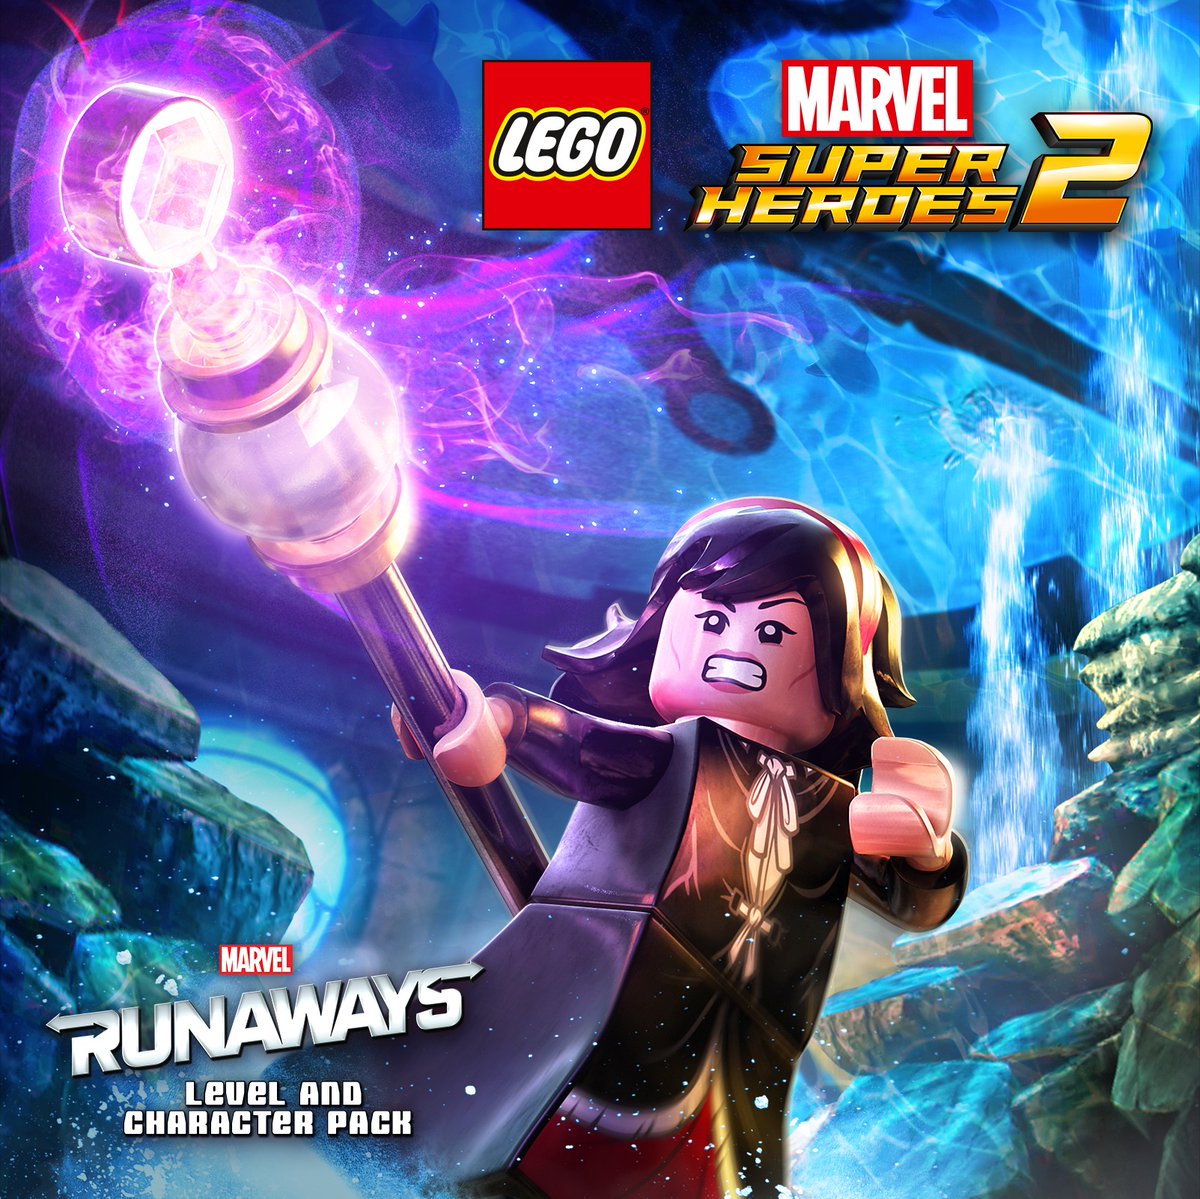 Skalk Seaboard Shredded LEGO Marvel Super Heroes 2 adds Marvel's Runaways Character and Level Pack